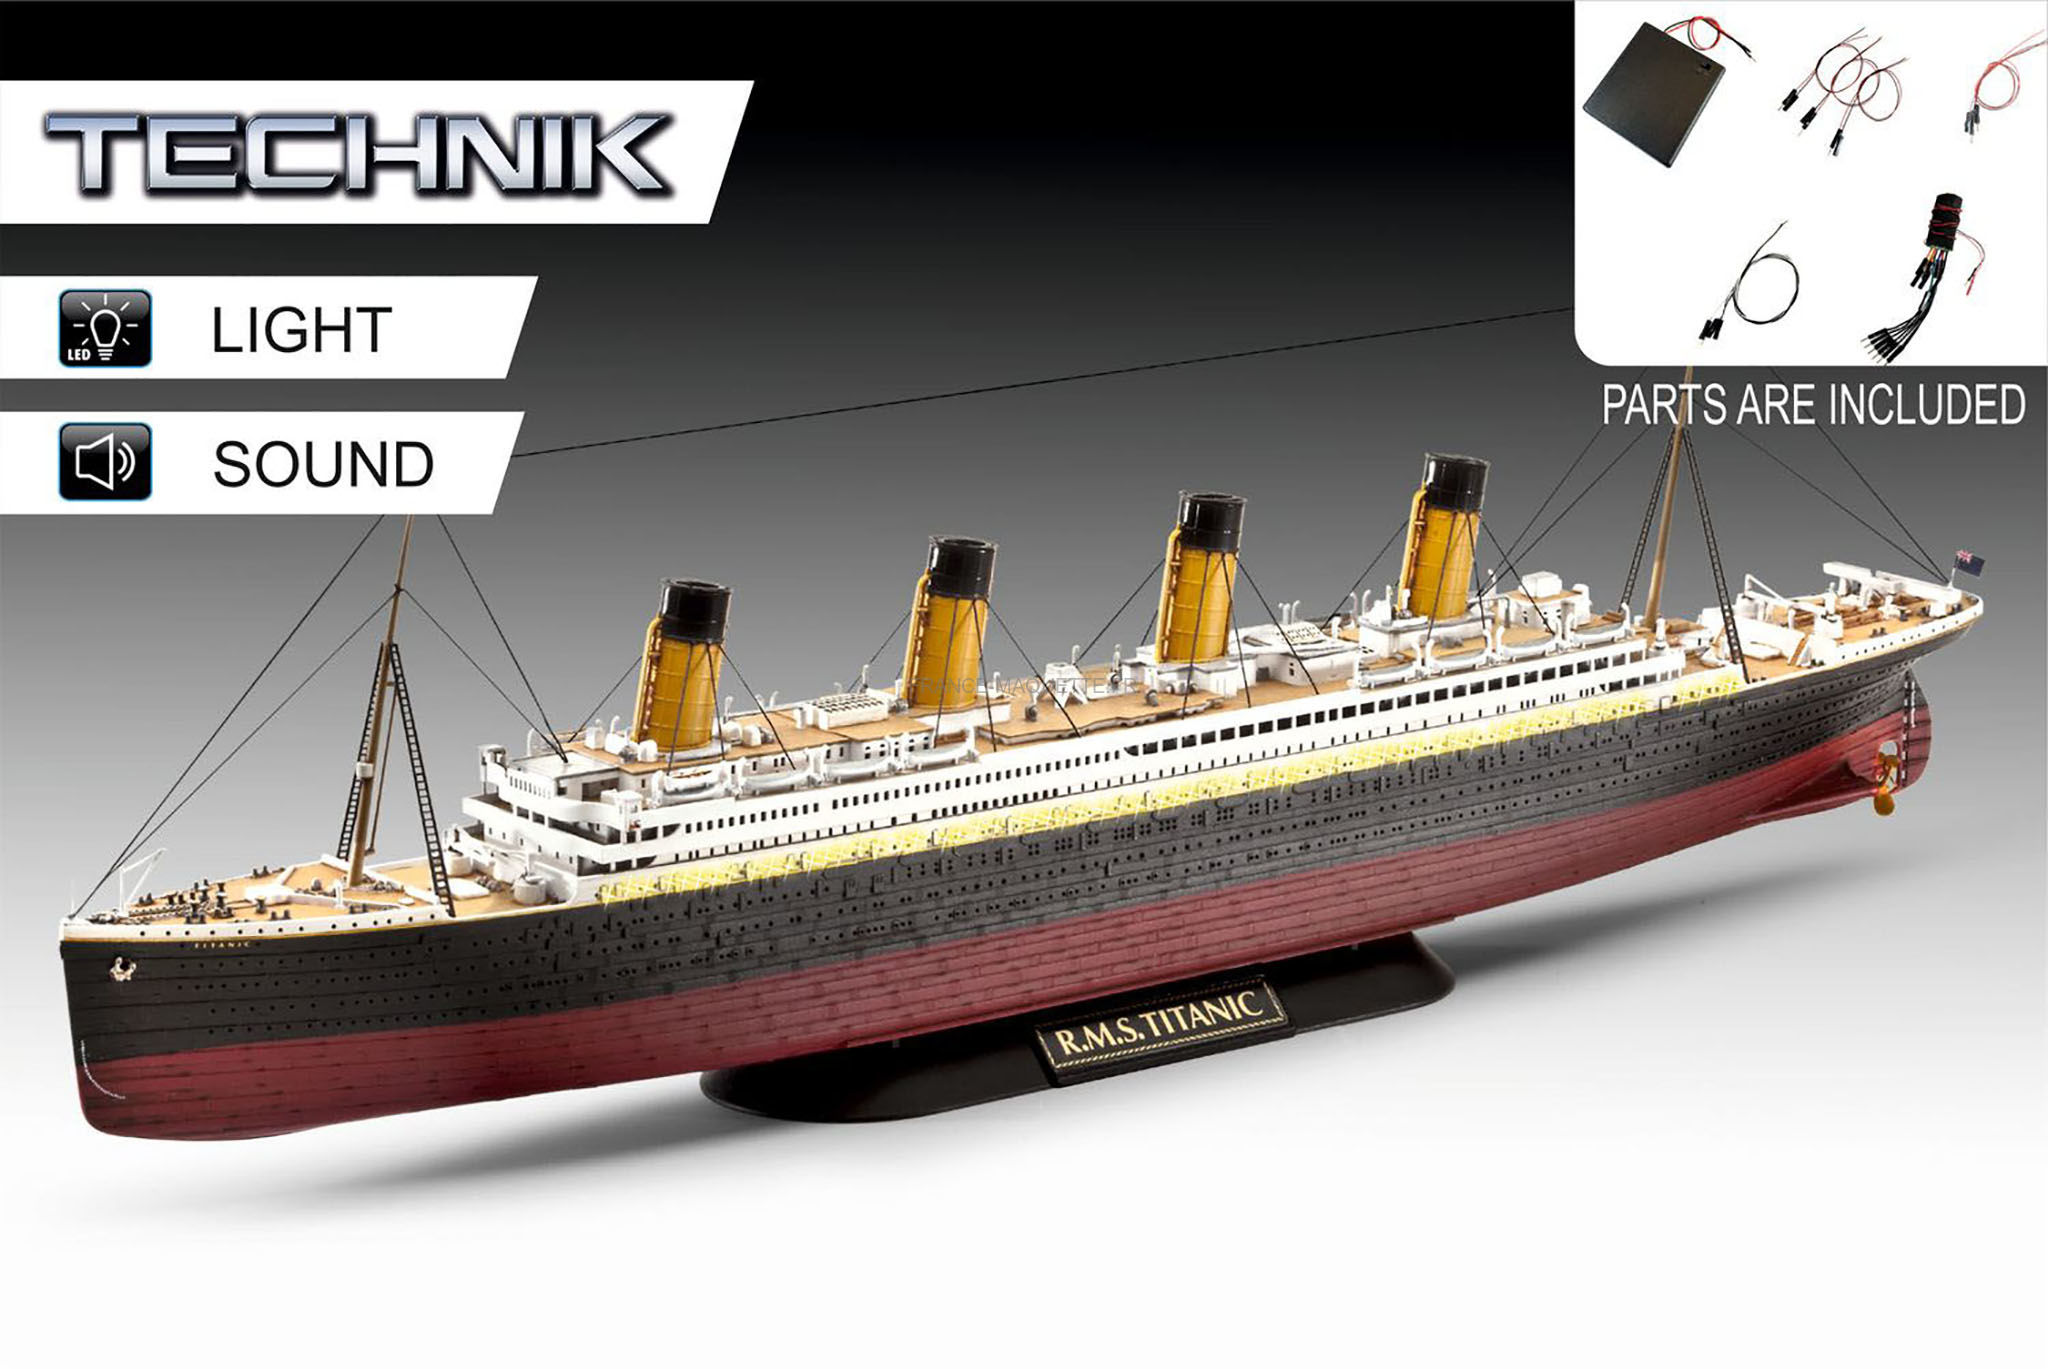 Revell Technik RMS Titanic-Technik Maquette Non laqué 458